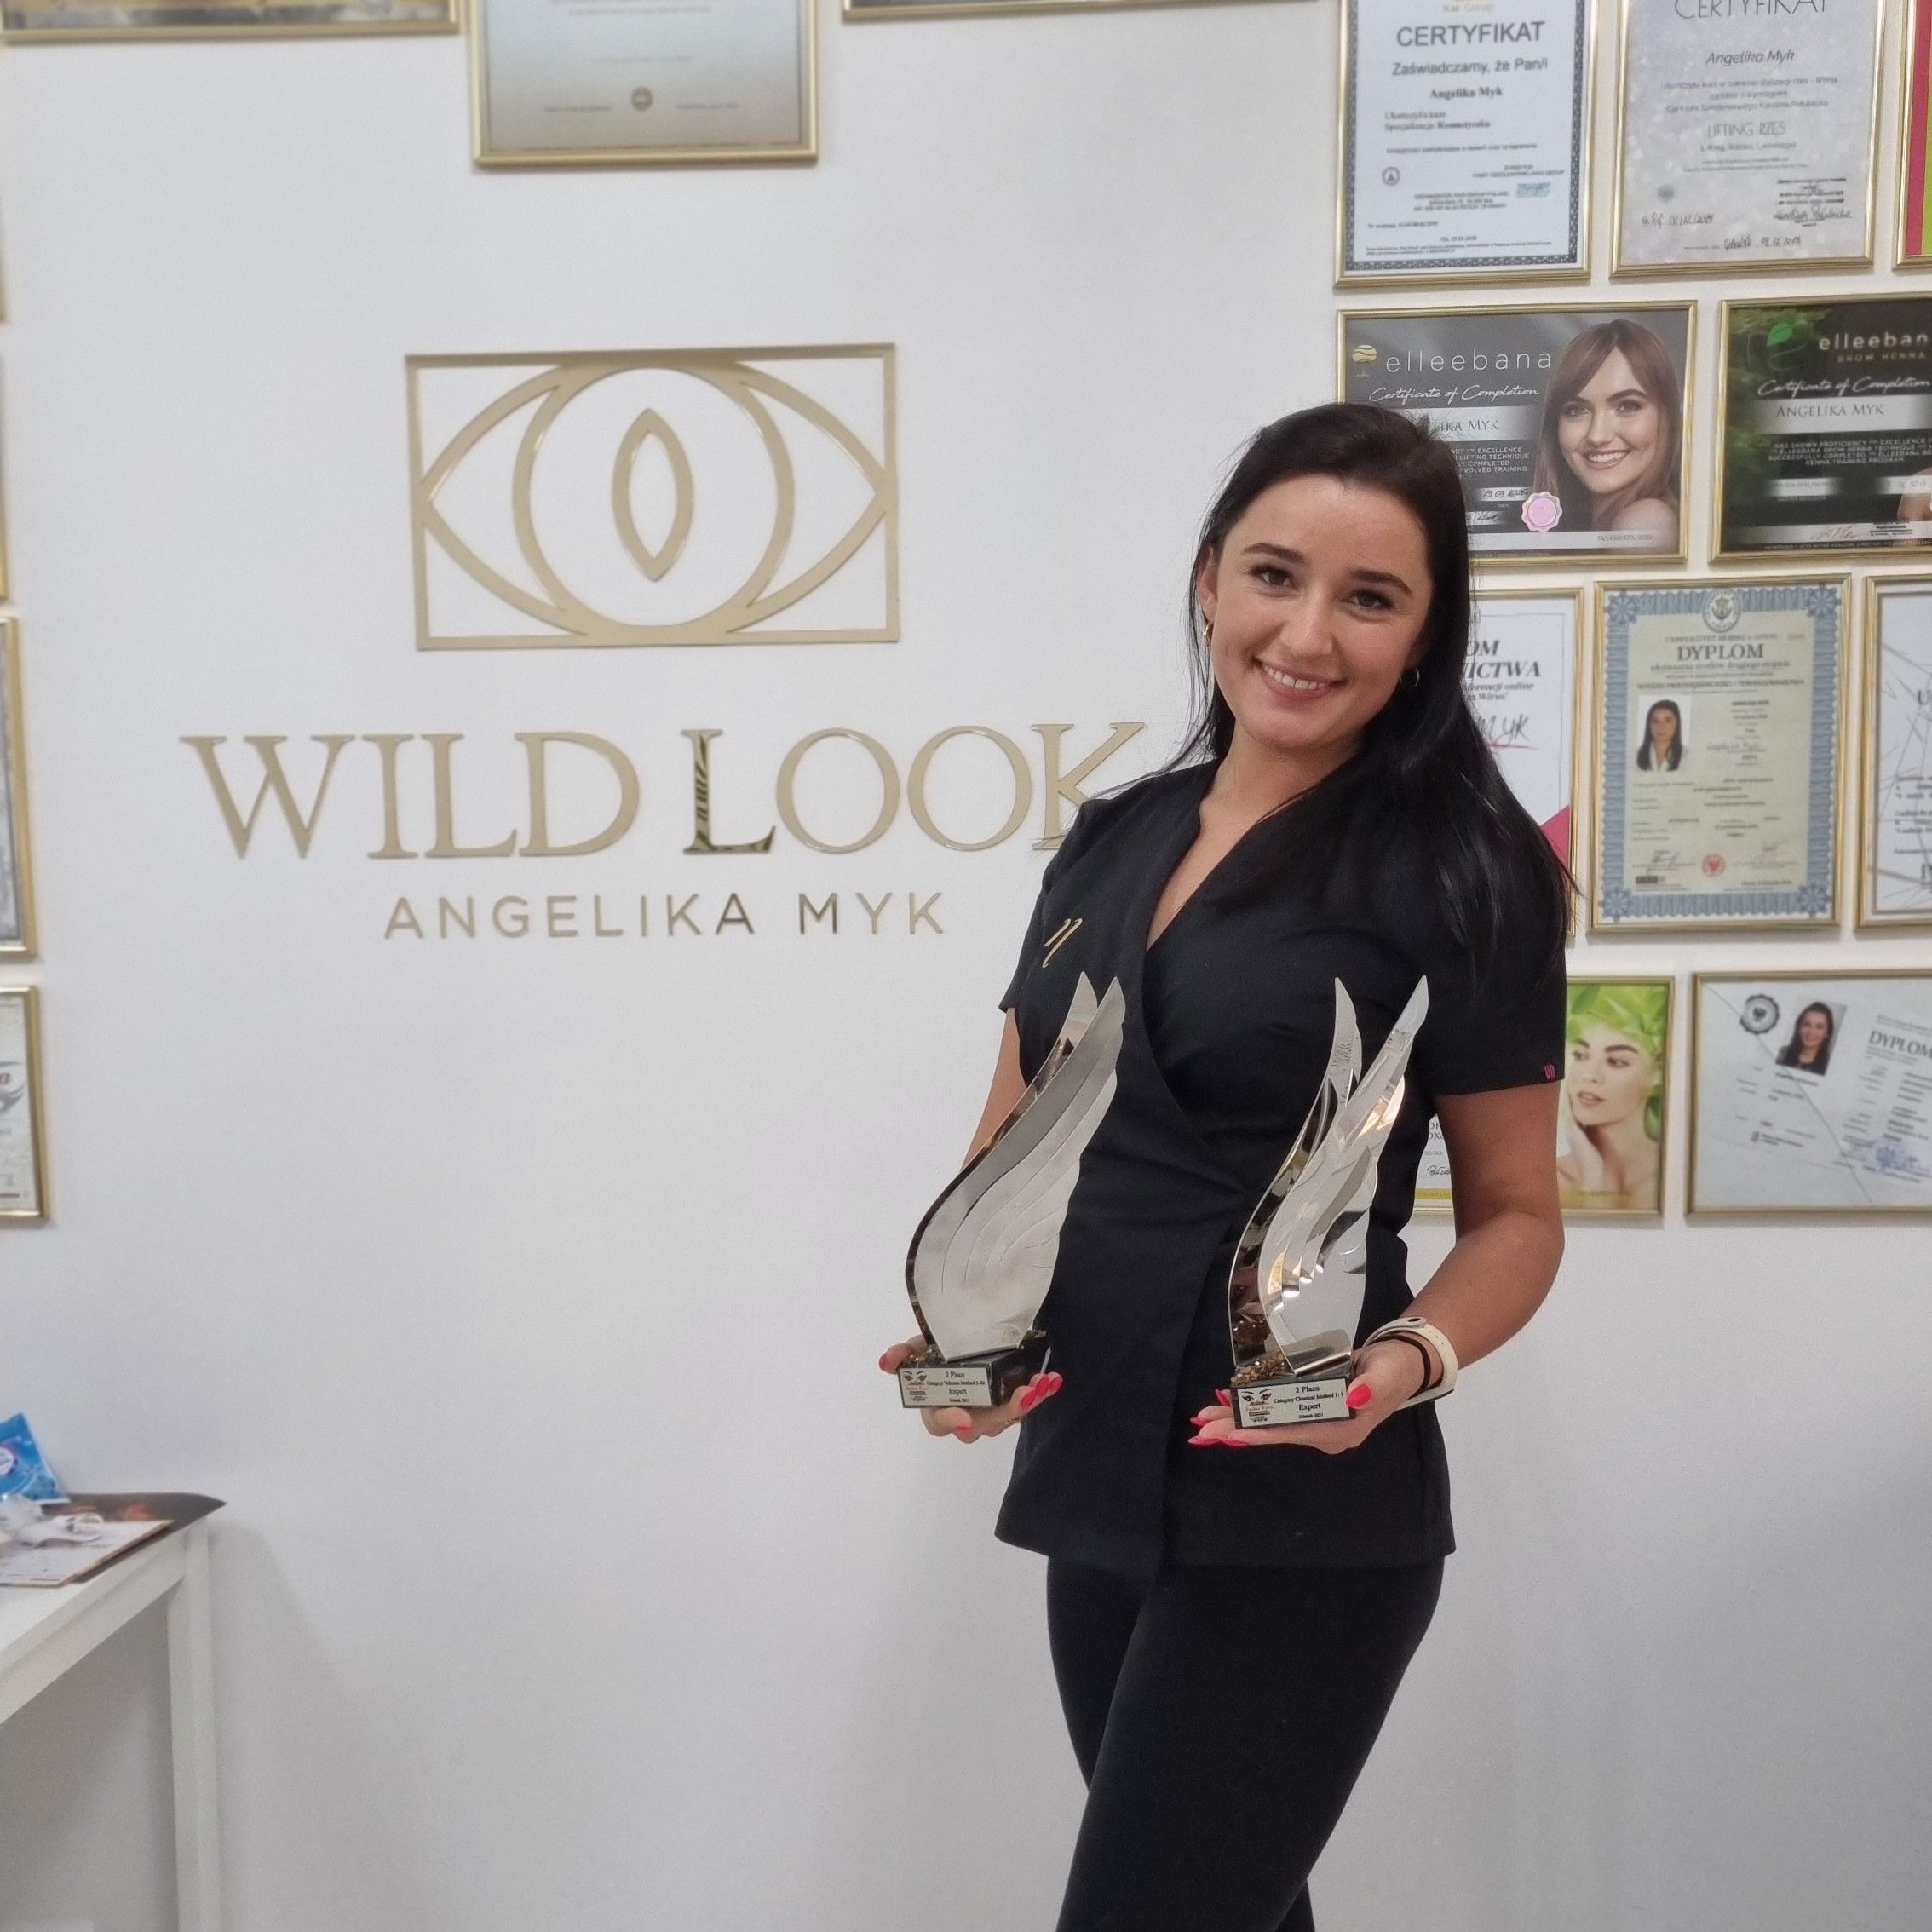 Angelika Myk - Wild Look Angelika Myk Instruktor Noble Lashes Elleebana